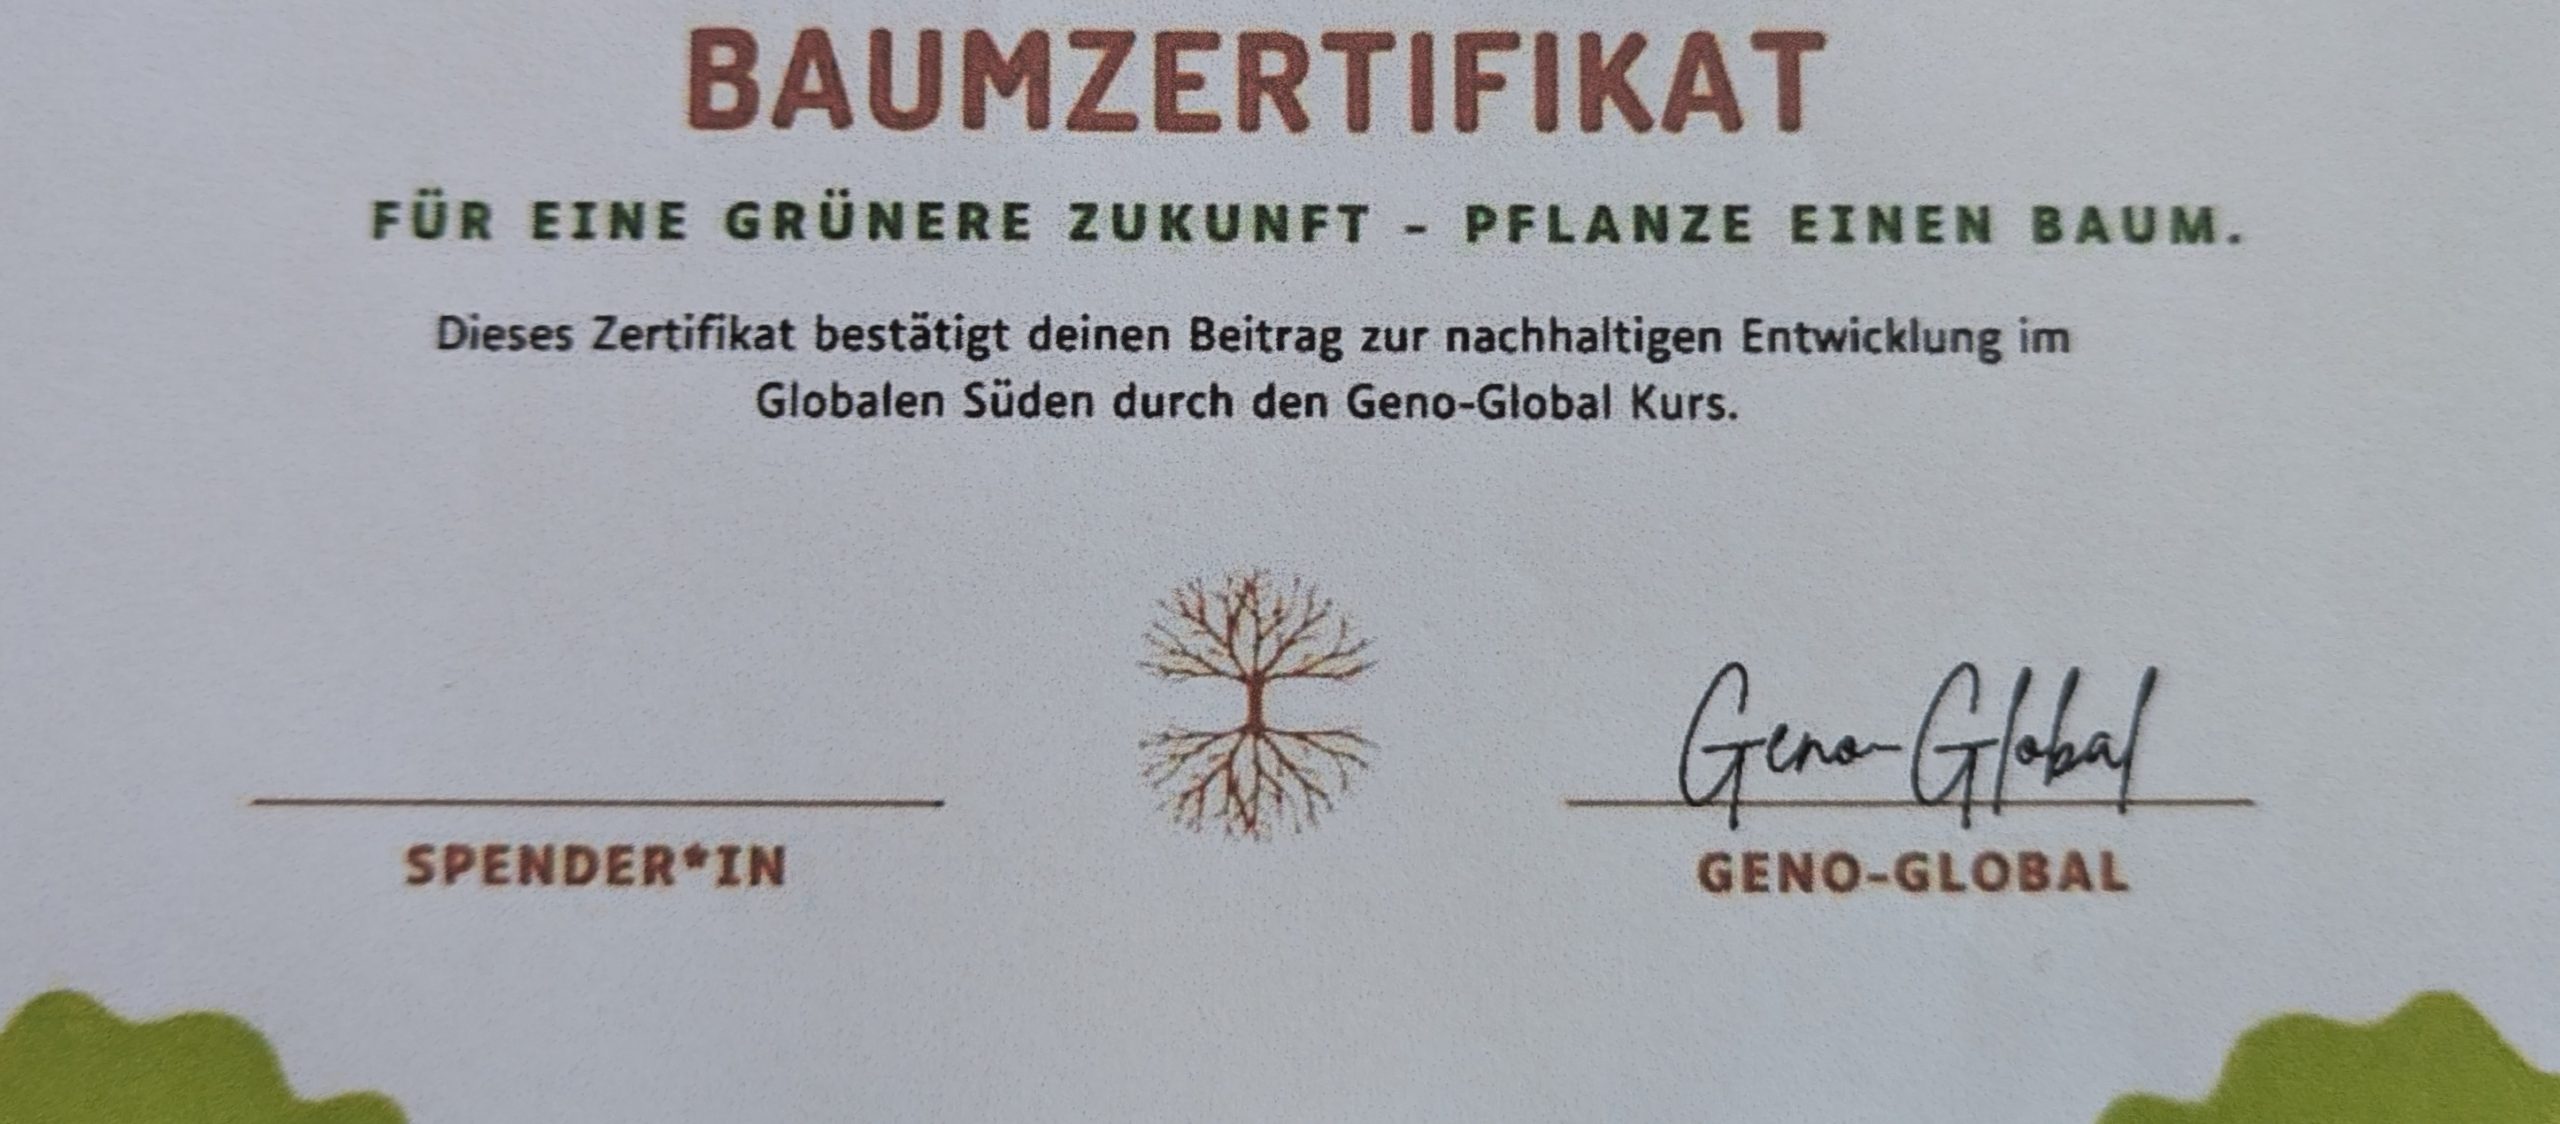 Geno-Global – das Geno pflanzt Bäume 